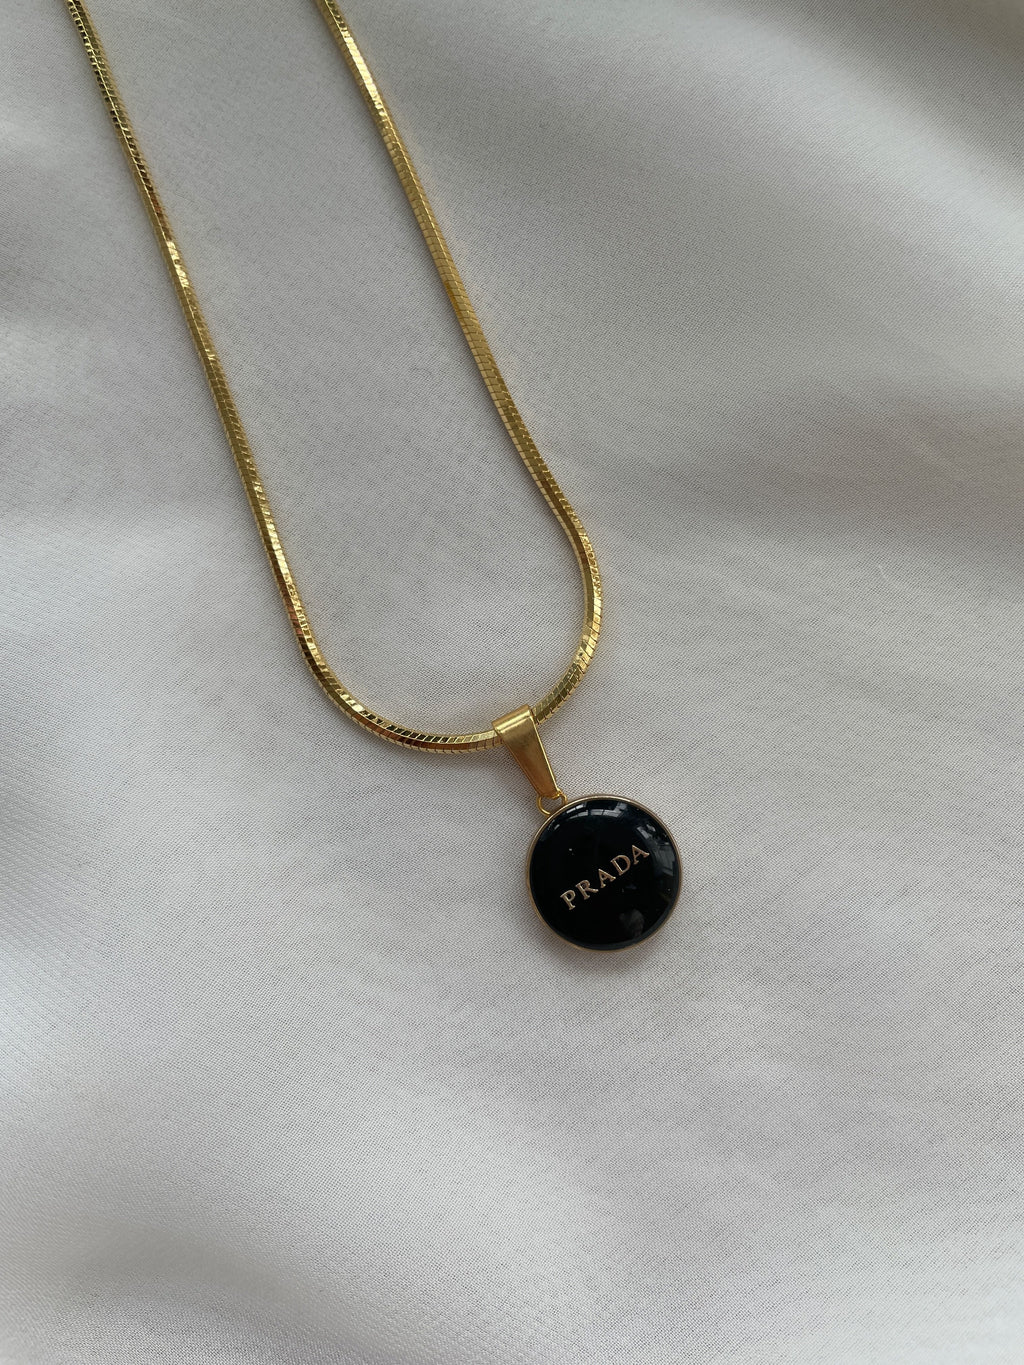 LV Button Necklace | Ella Emma Design